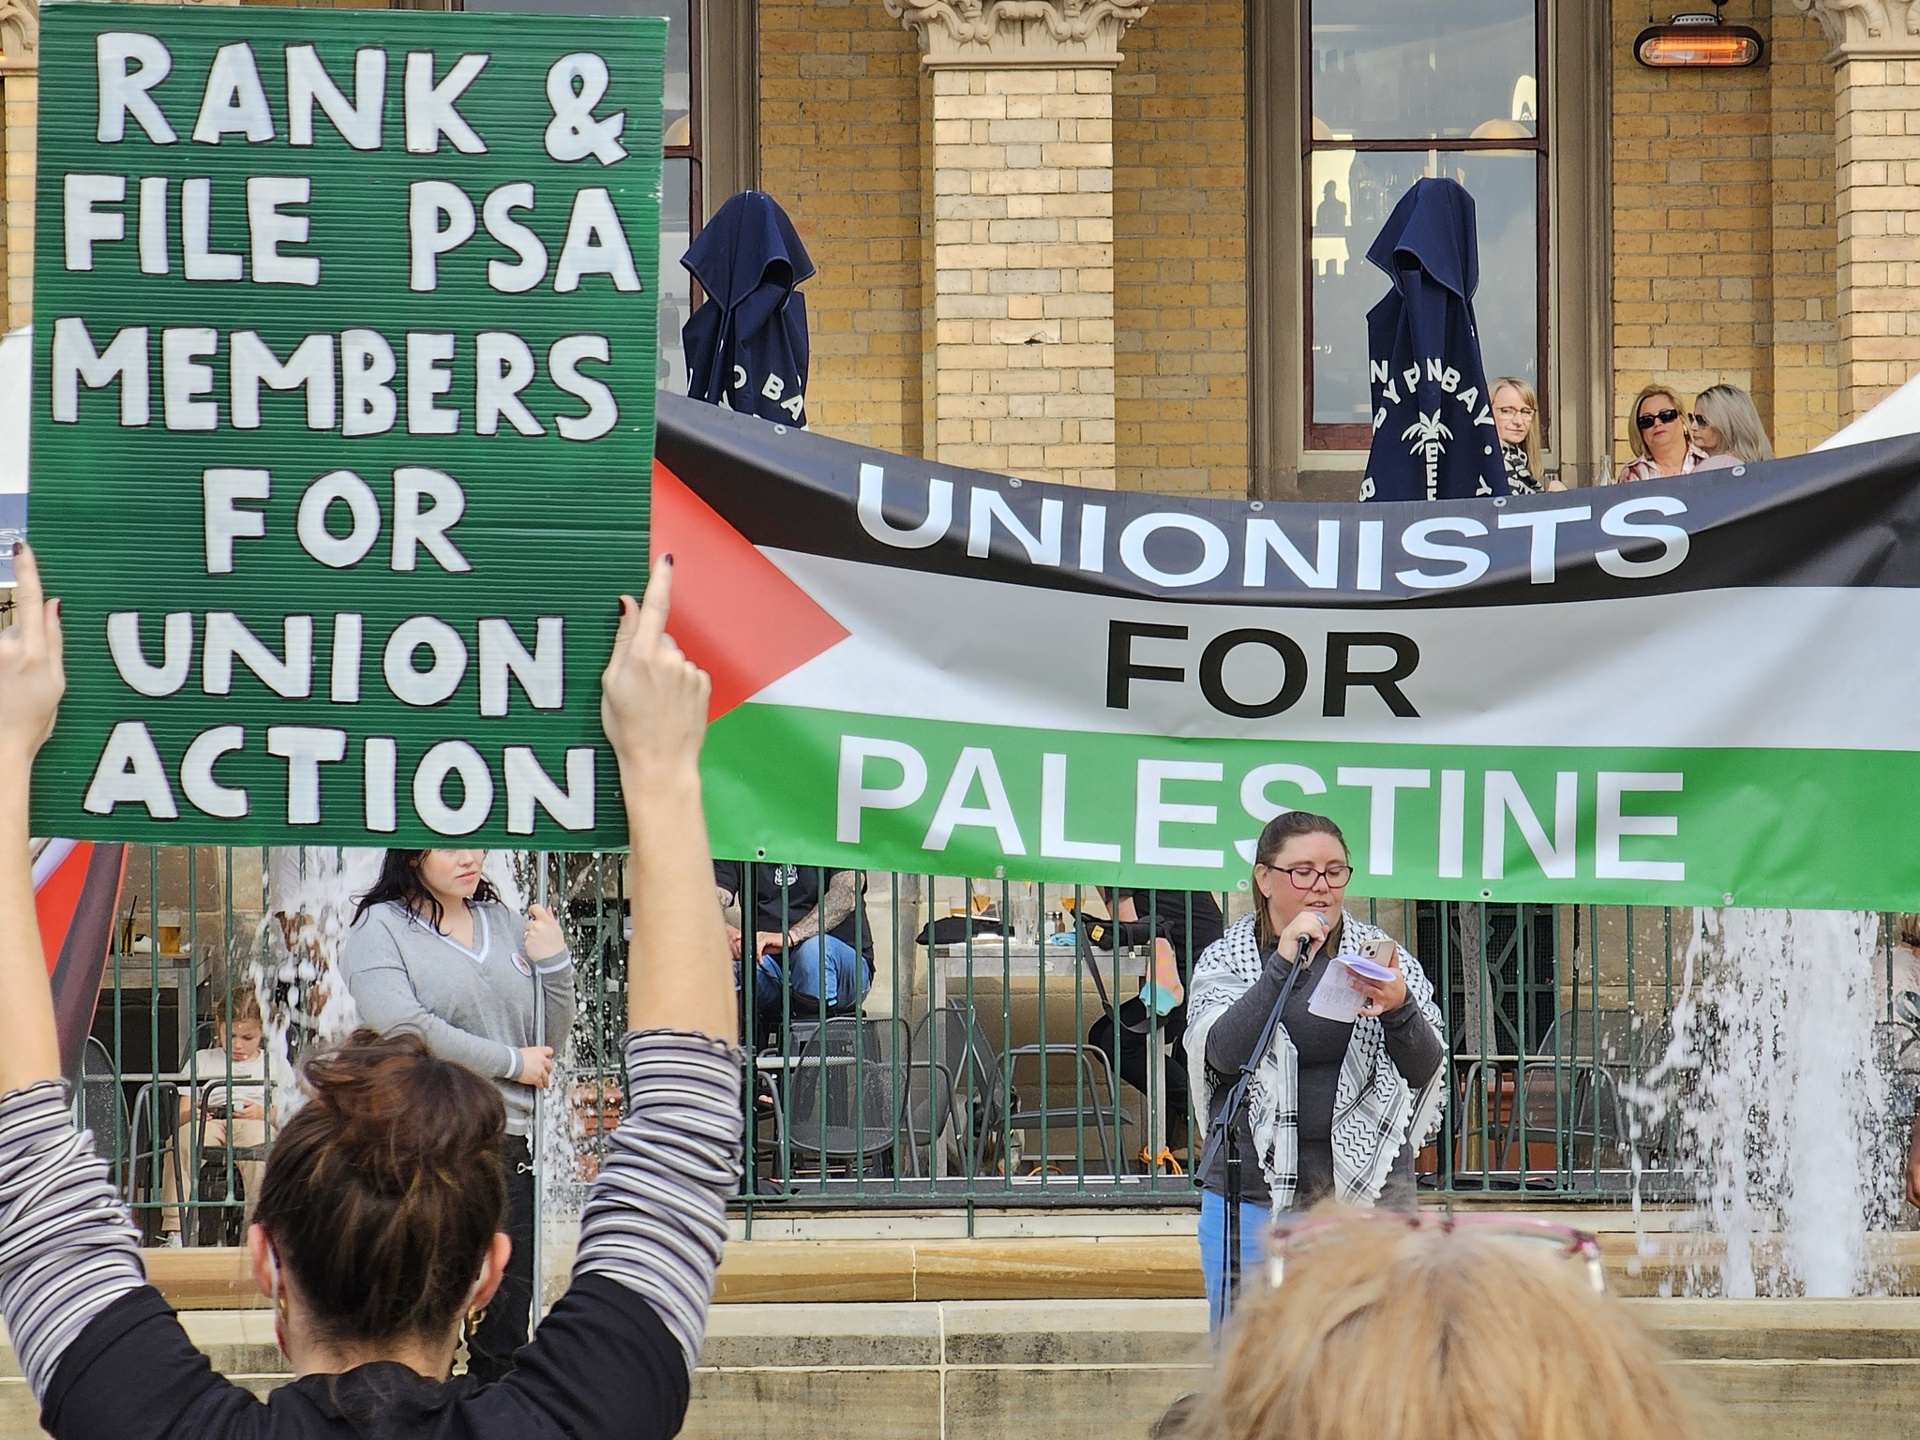 Union members for Palestine, Muloobinba/Newcastle, May 25